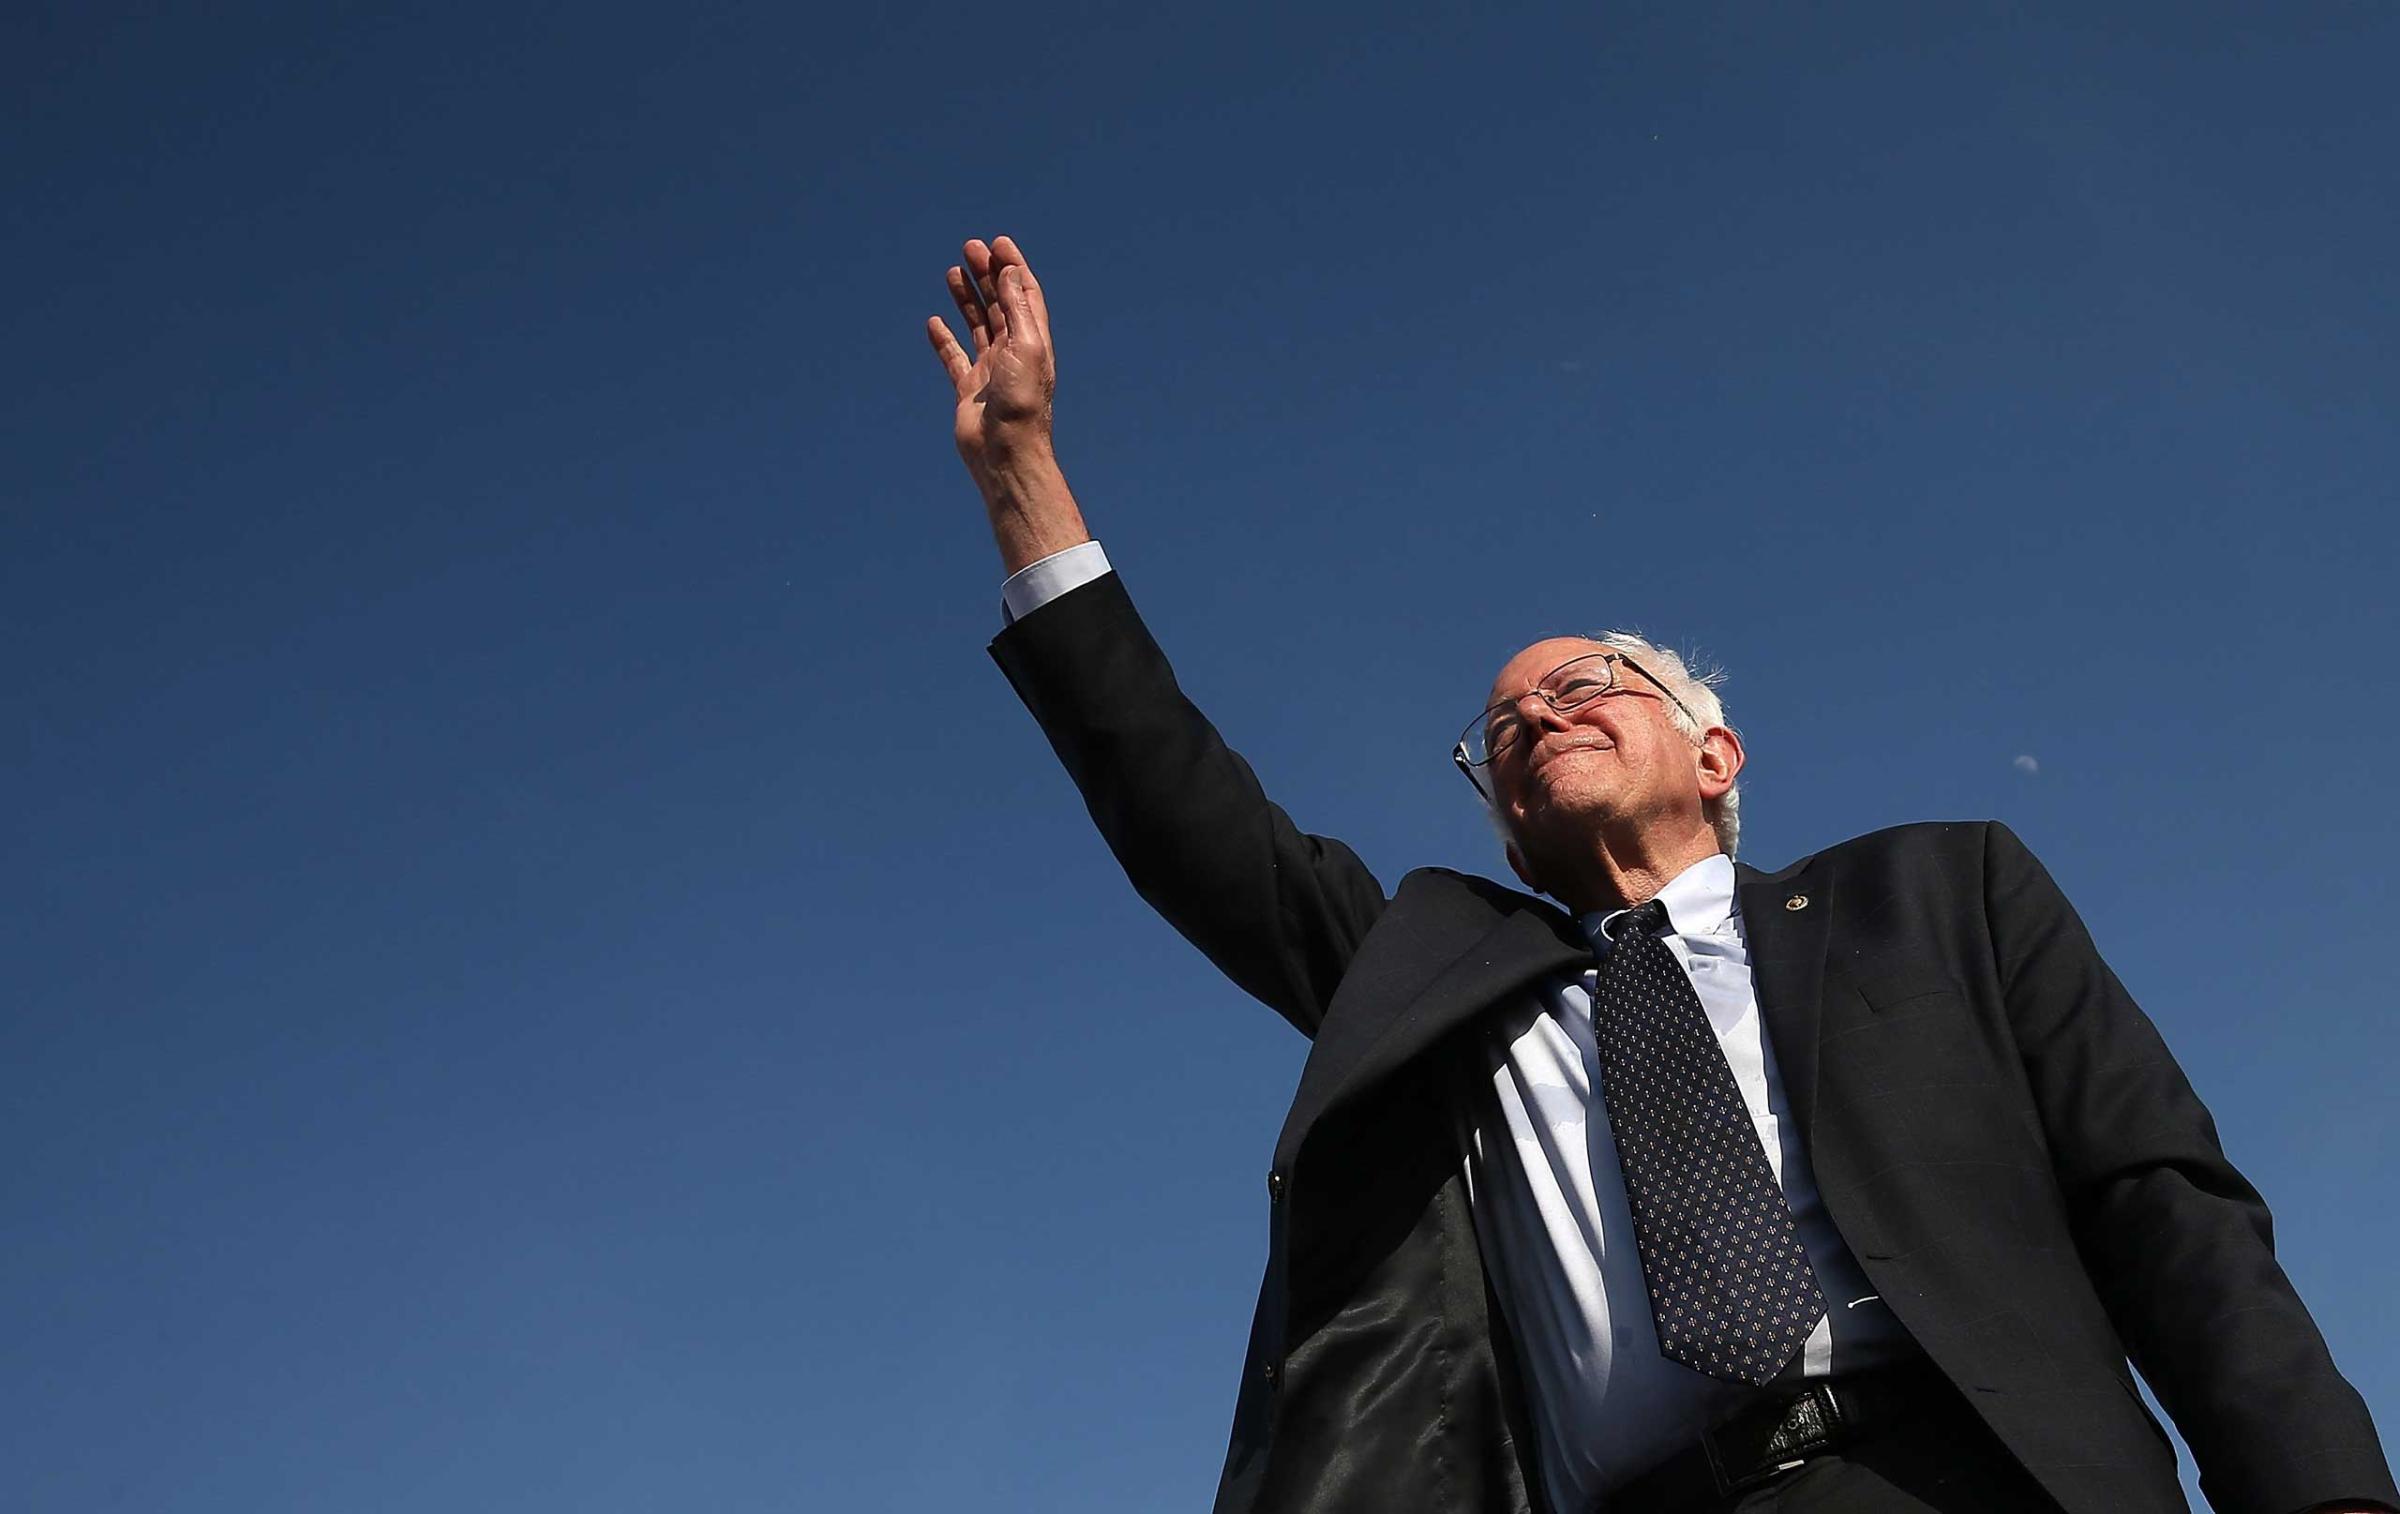 Sen. Bernie Sanders Launches Presidential Bid In Vermont